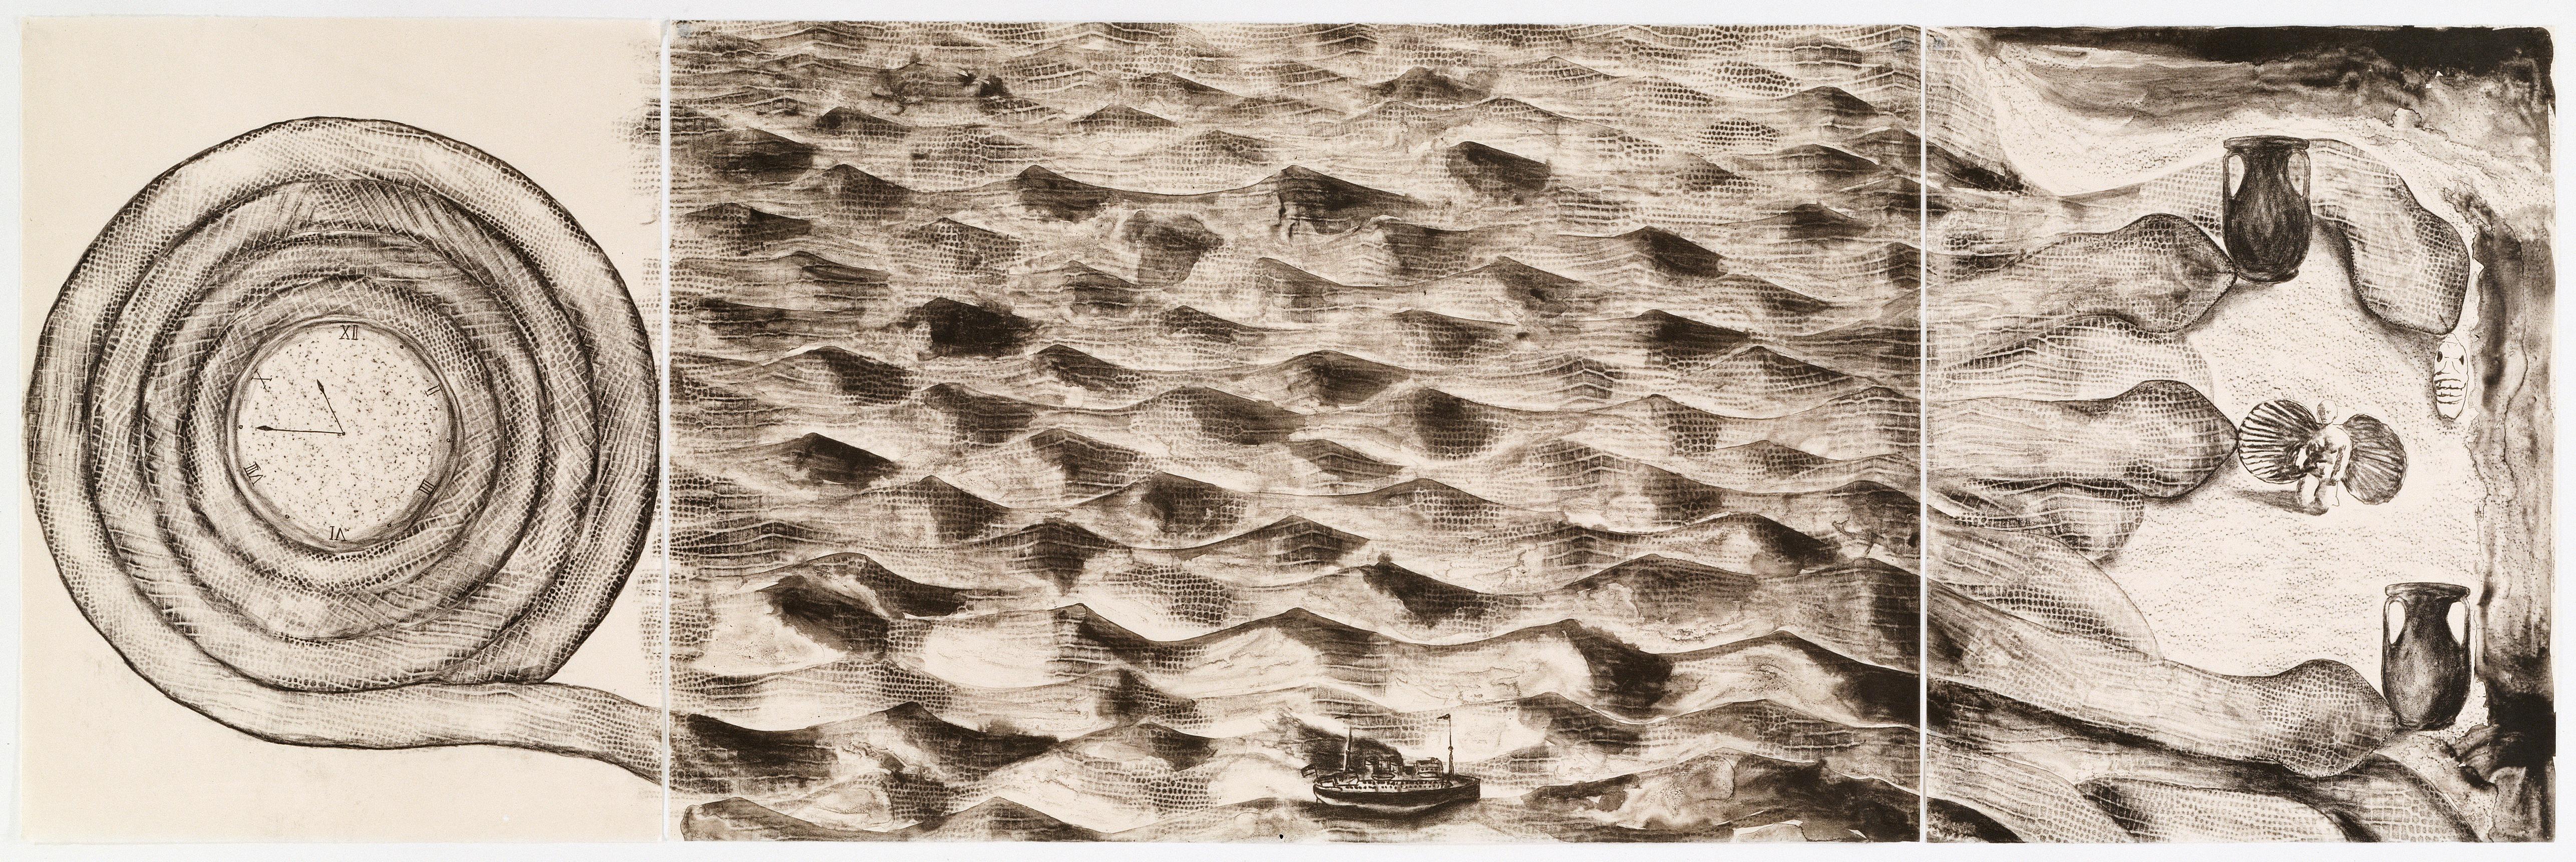 Clemente Untitled B: surreal mythical landscape, voyage with ocean, Venus, snake